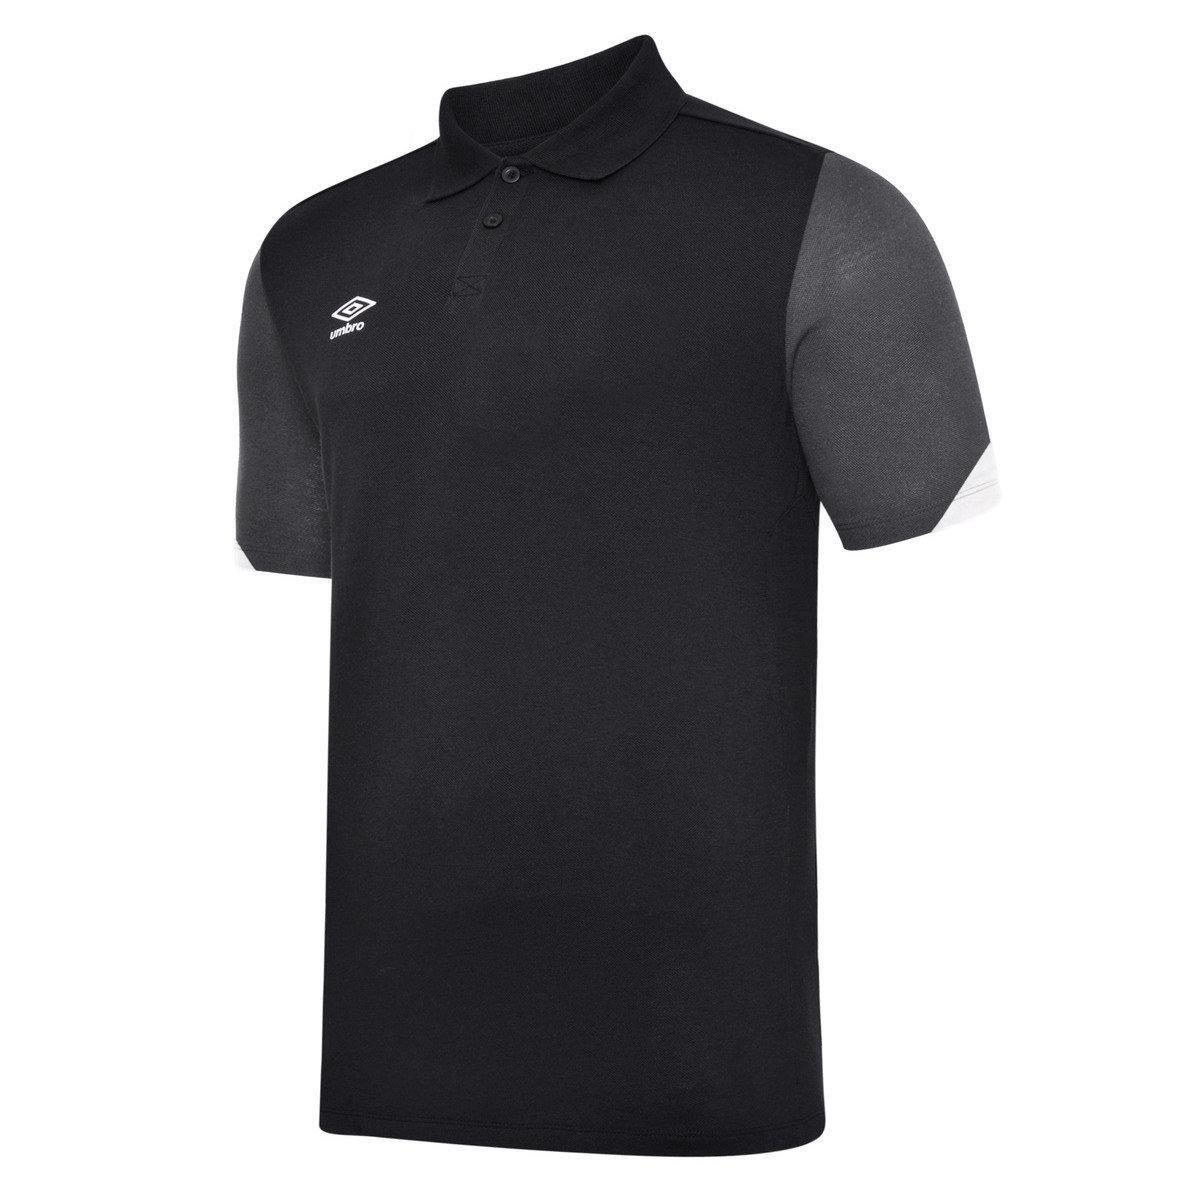 UMBRO Childrens/Kids Total Training Polo Shirt (Black/White/Carbon)